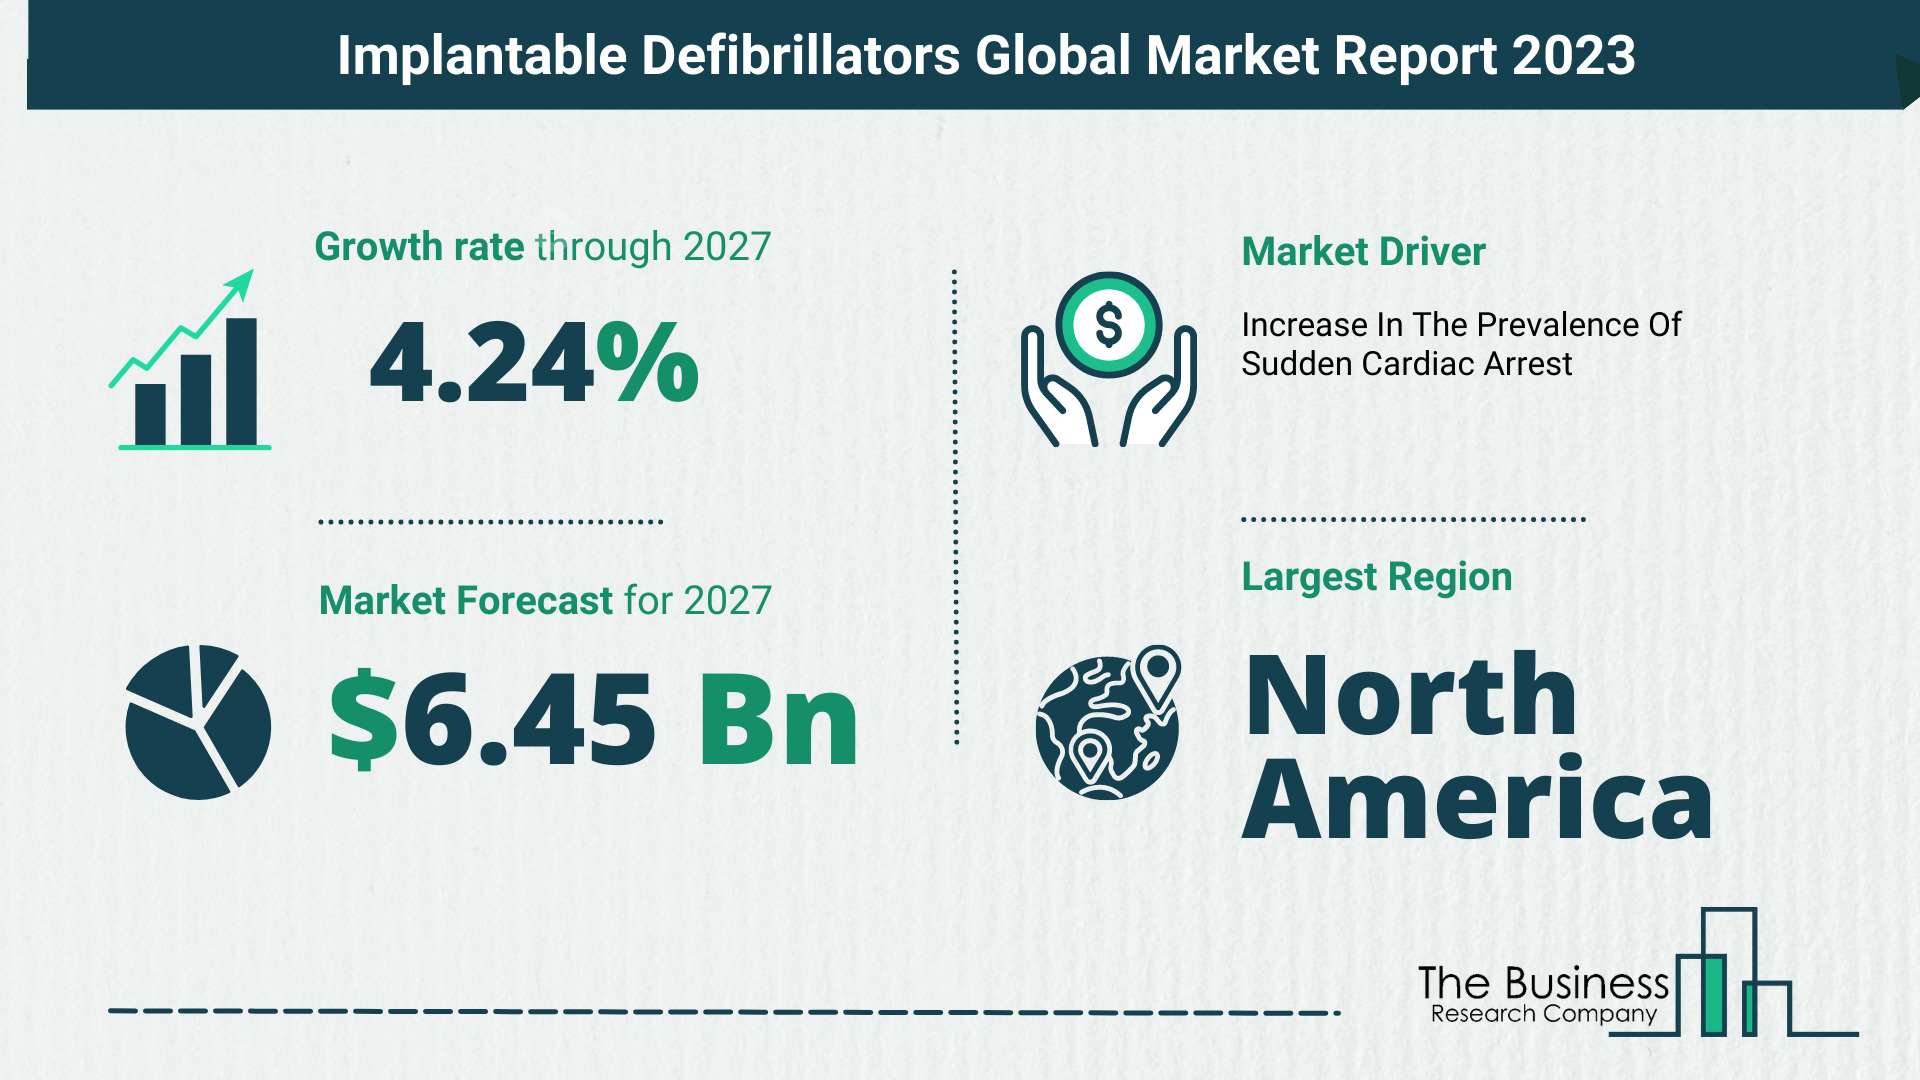 Global Implantable Defibrillators Market Opportunities And Strategies 2023